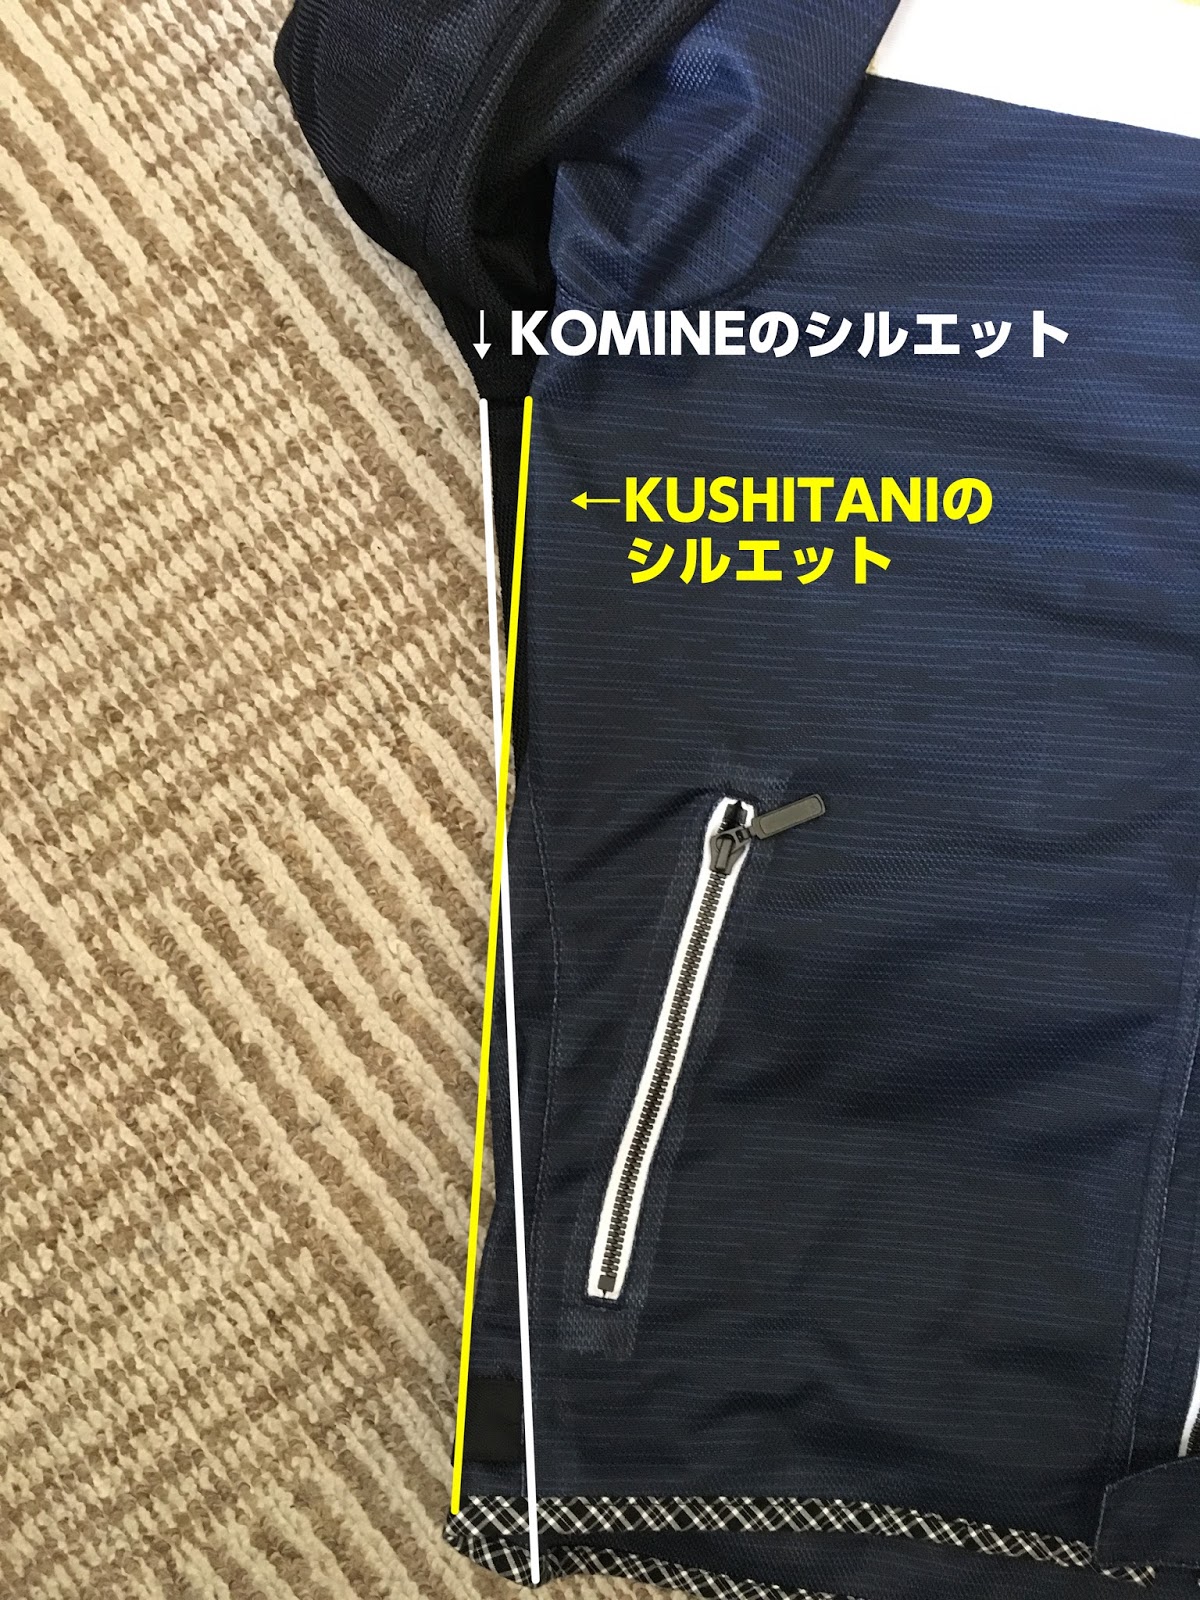 W650でぶらり: KUSHITANI フルメッシュパーカージャケットK-2310の実力は？